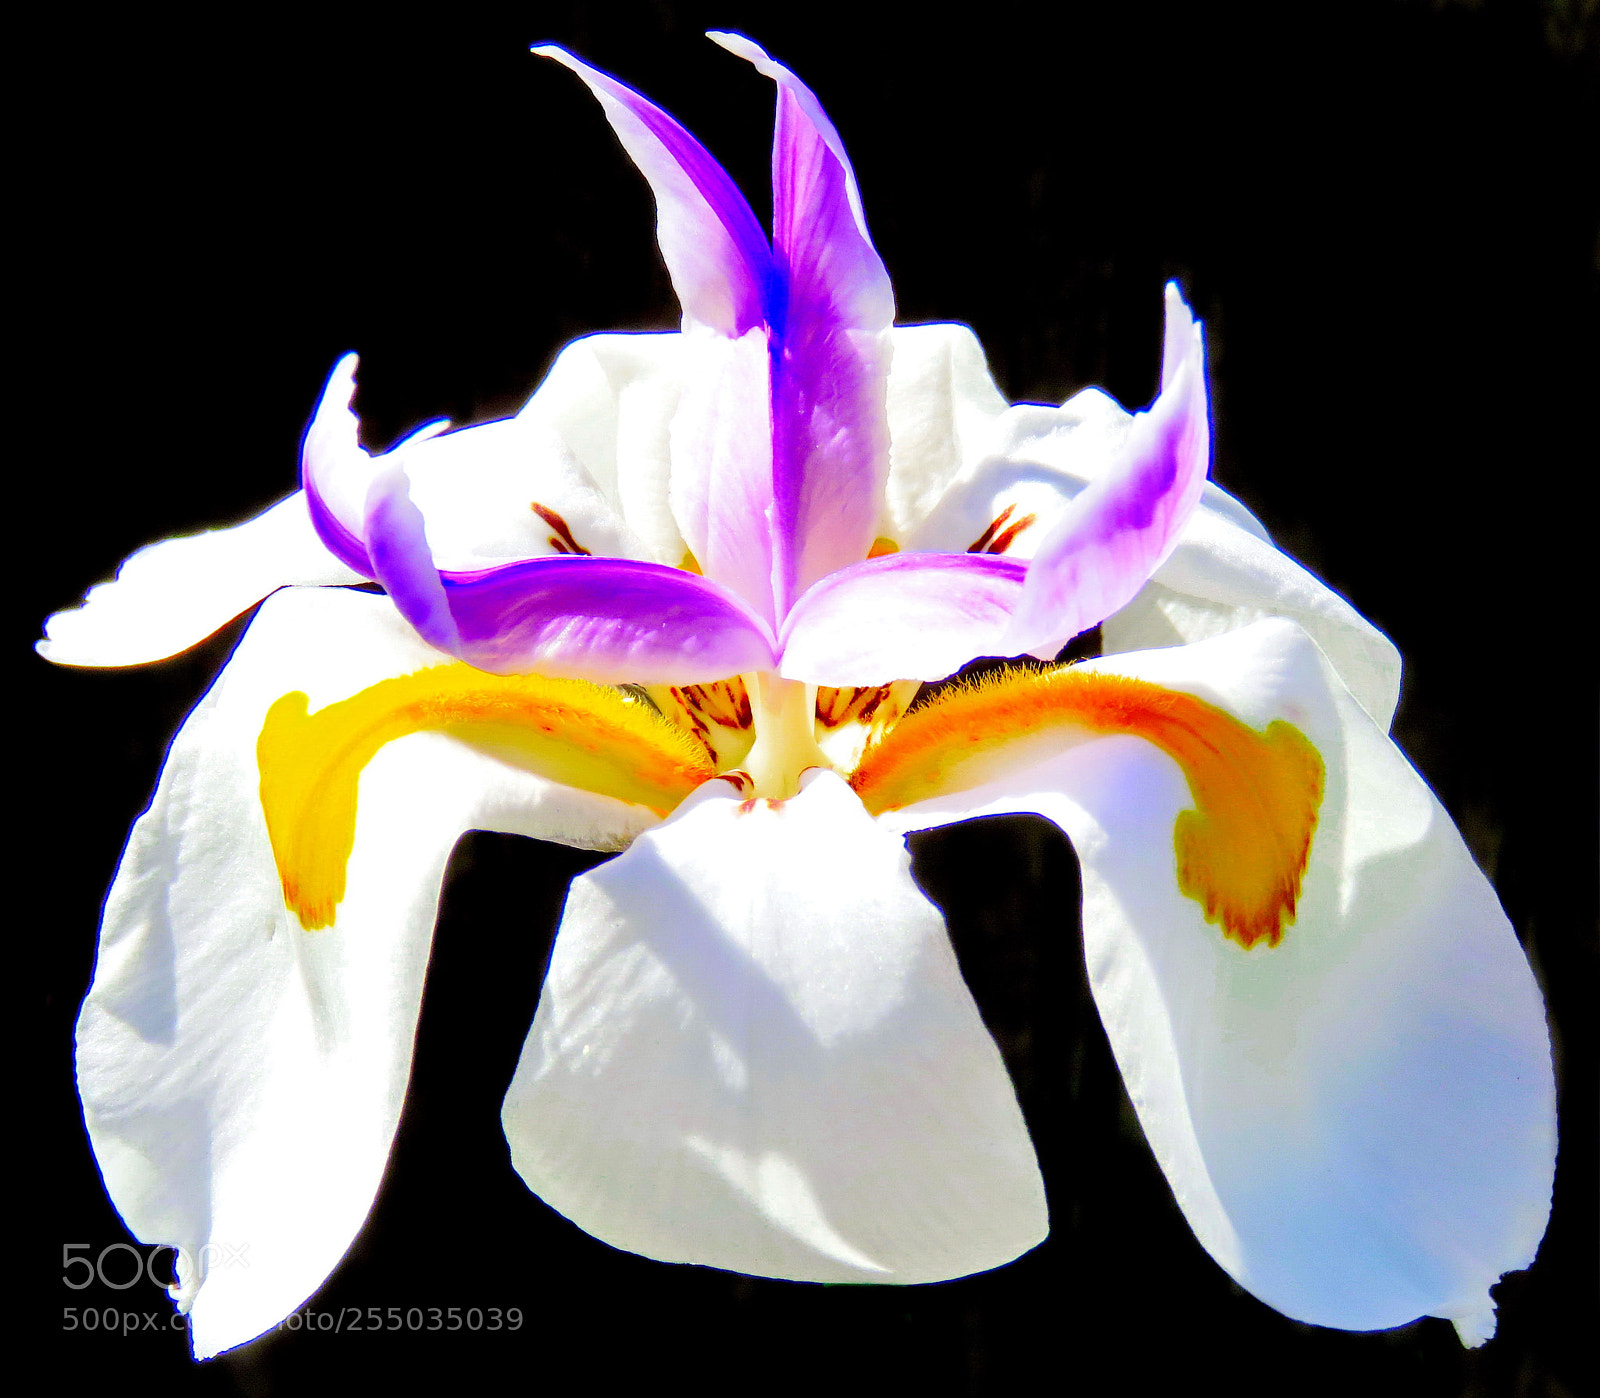 Canon PowerShot SX60 HS sample photo. White iris flower photography